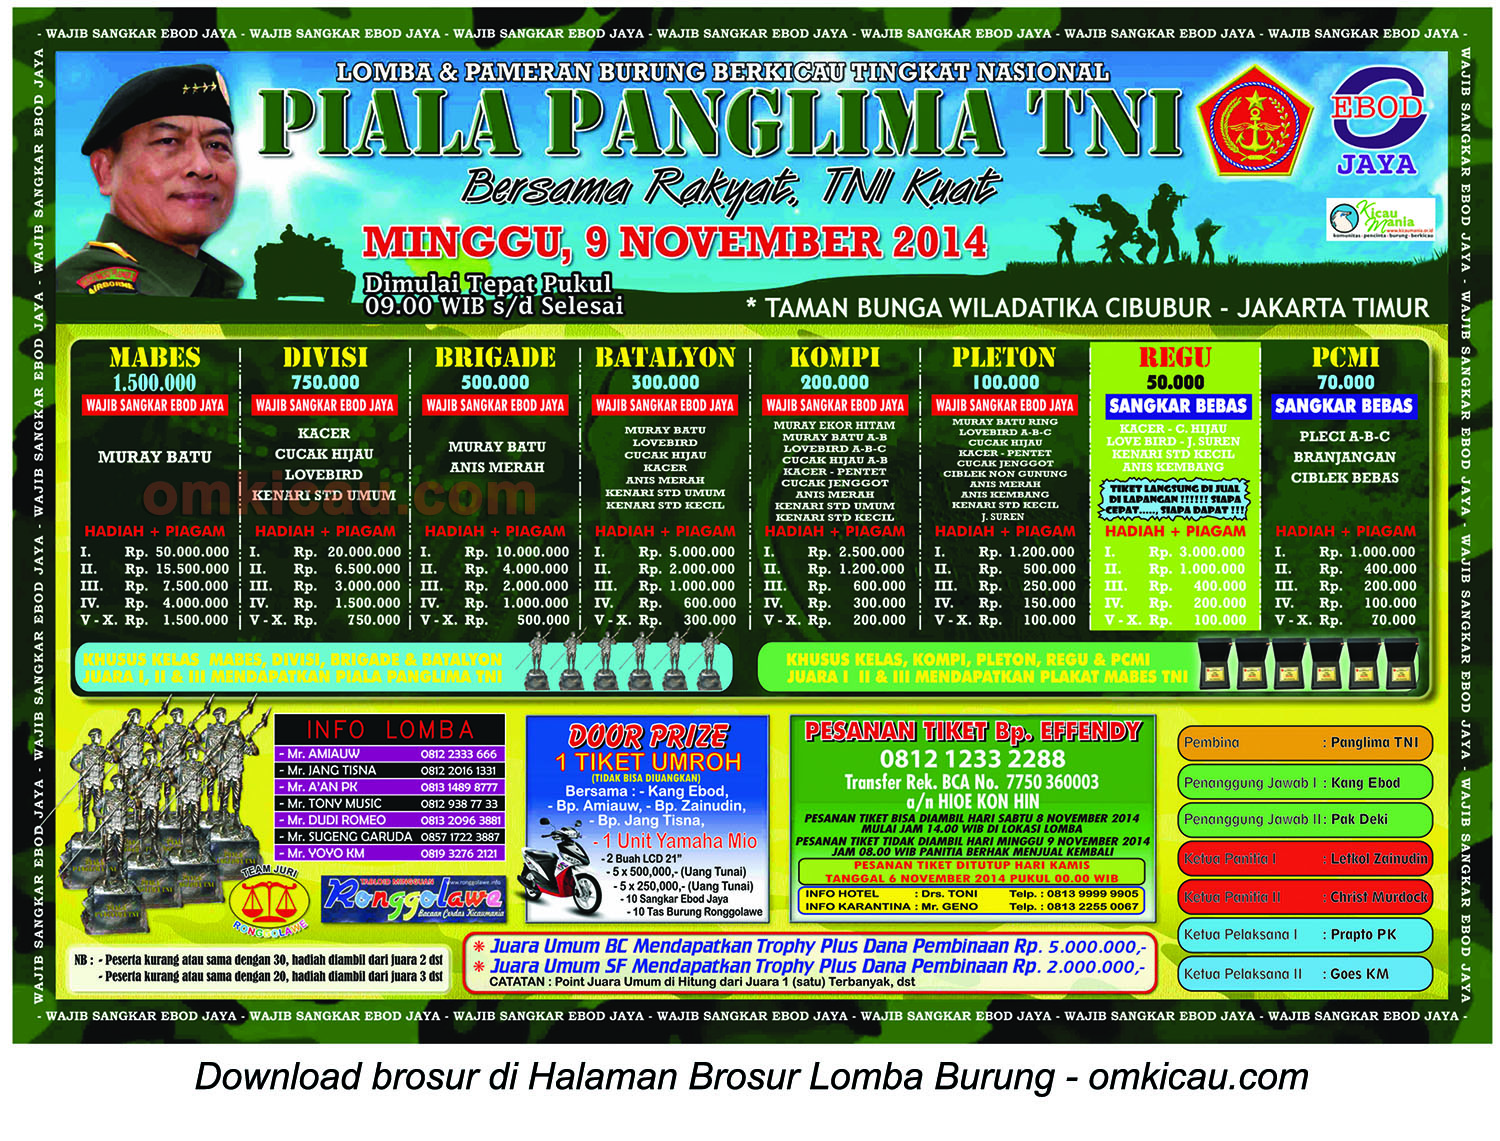 Brosur Lomba Burung Piala Panglima TNI Jakarta Timur, 9 November 2014